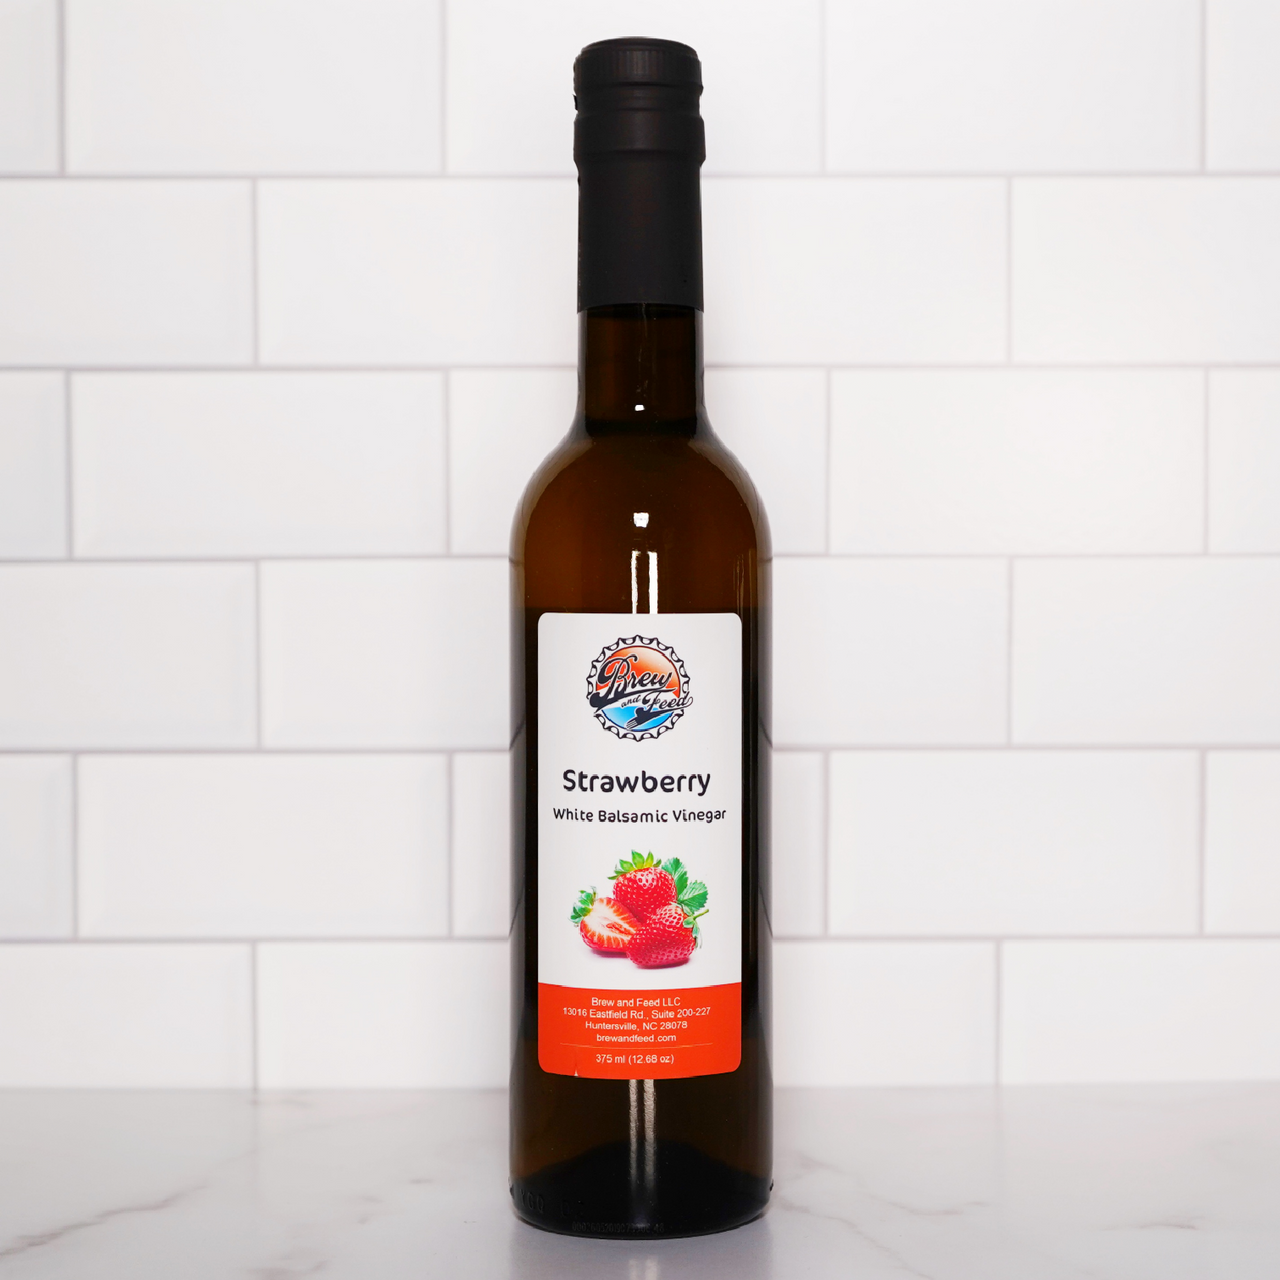 Strawberry White Balsamic Vinegar (375 ml / 12.68 OZ)